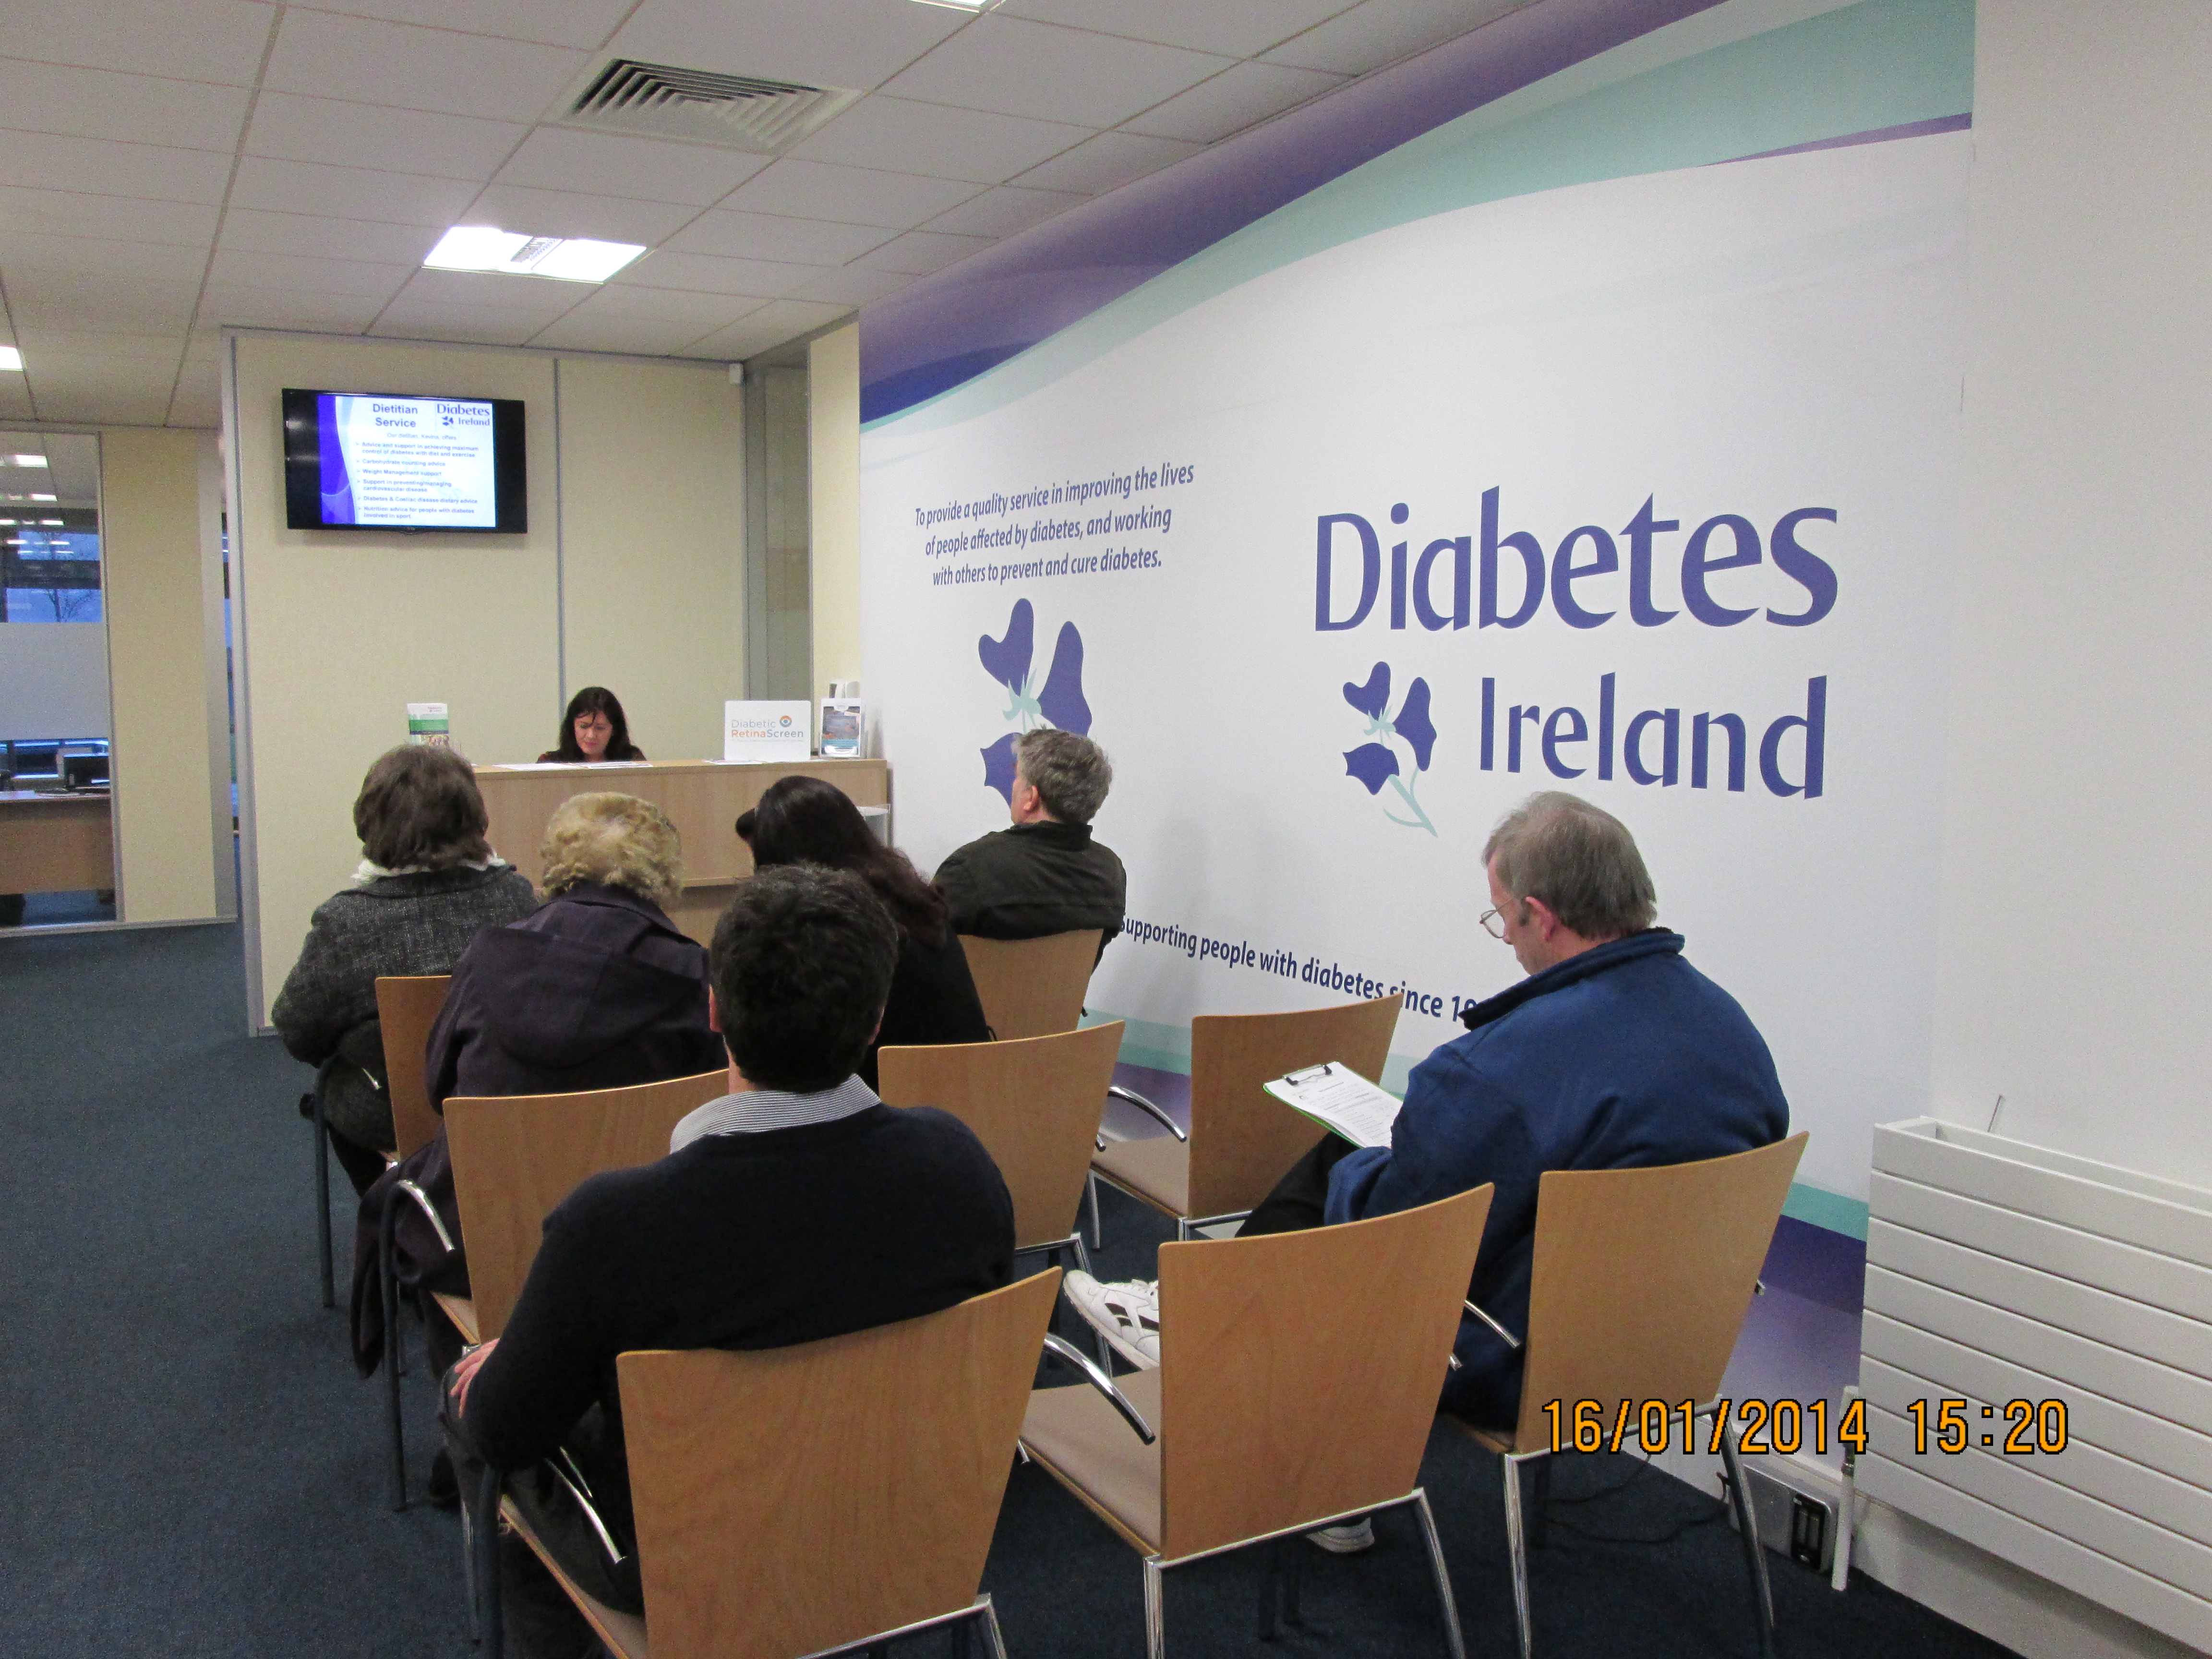 Diabetes Ireland Care Centre expands due to demand - Diabetes Ireland